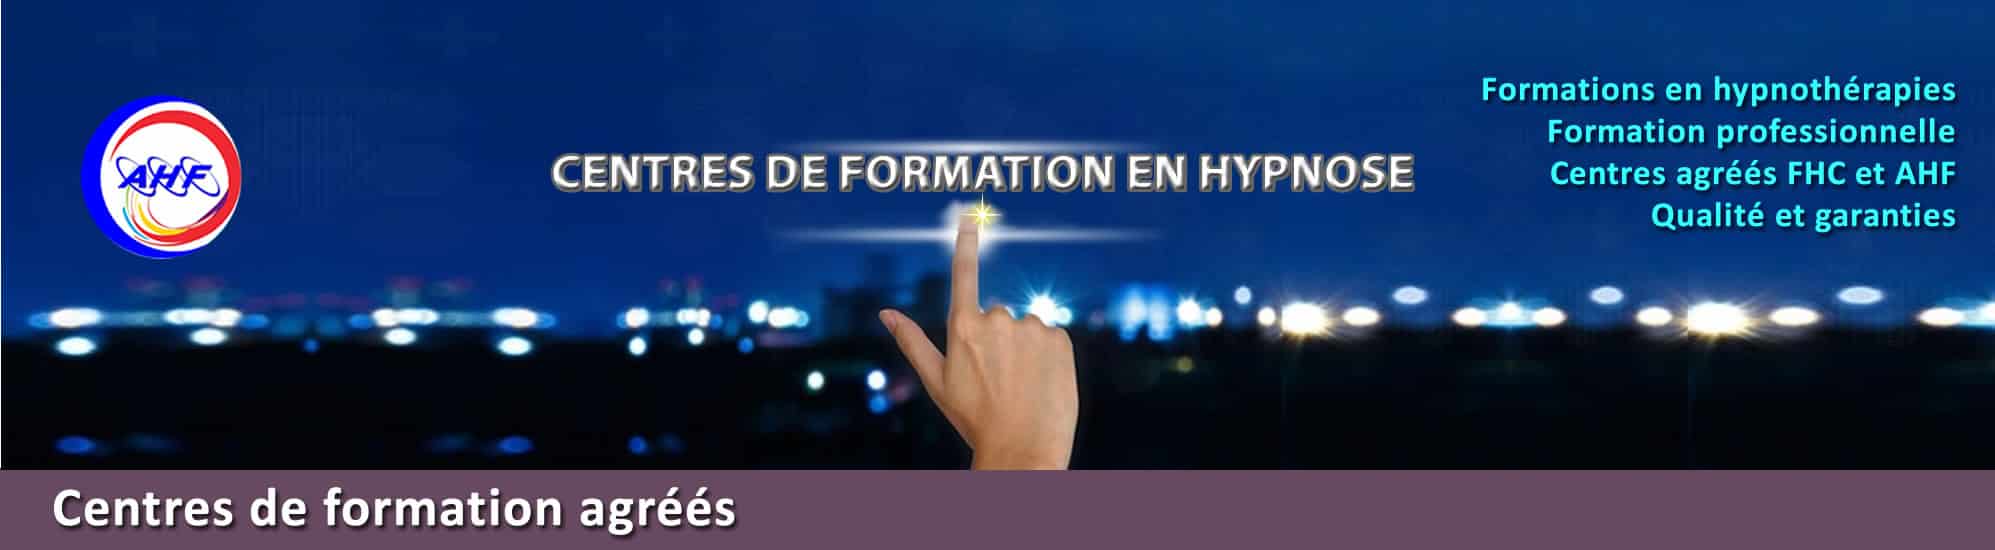 formation hypnose médicale hypnothérapie formation